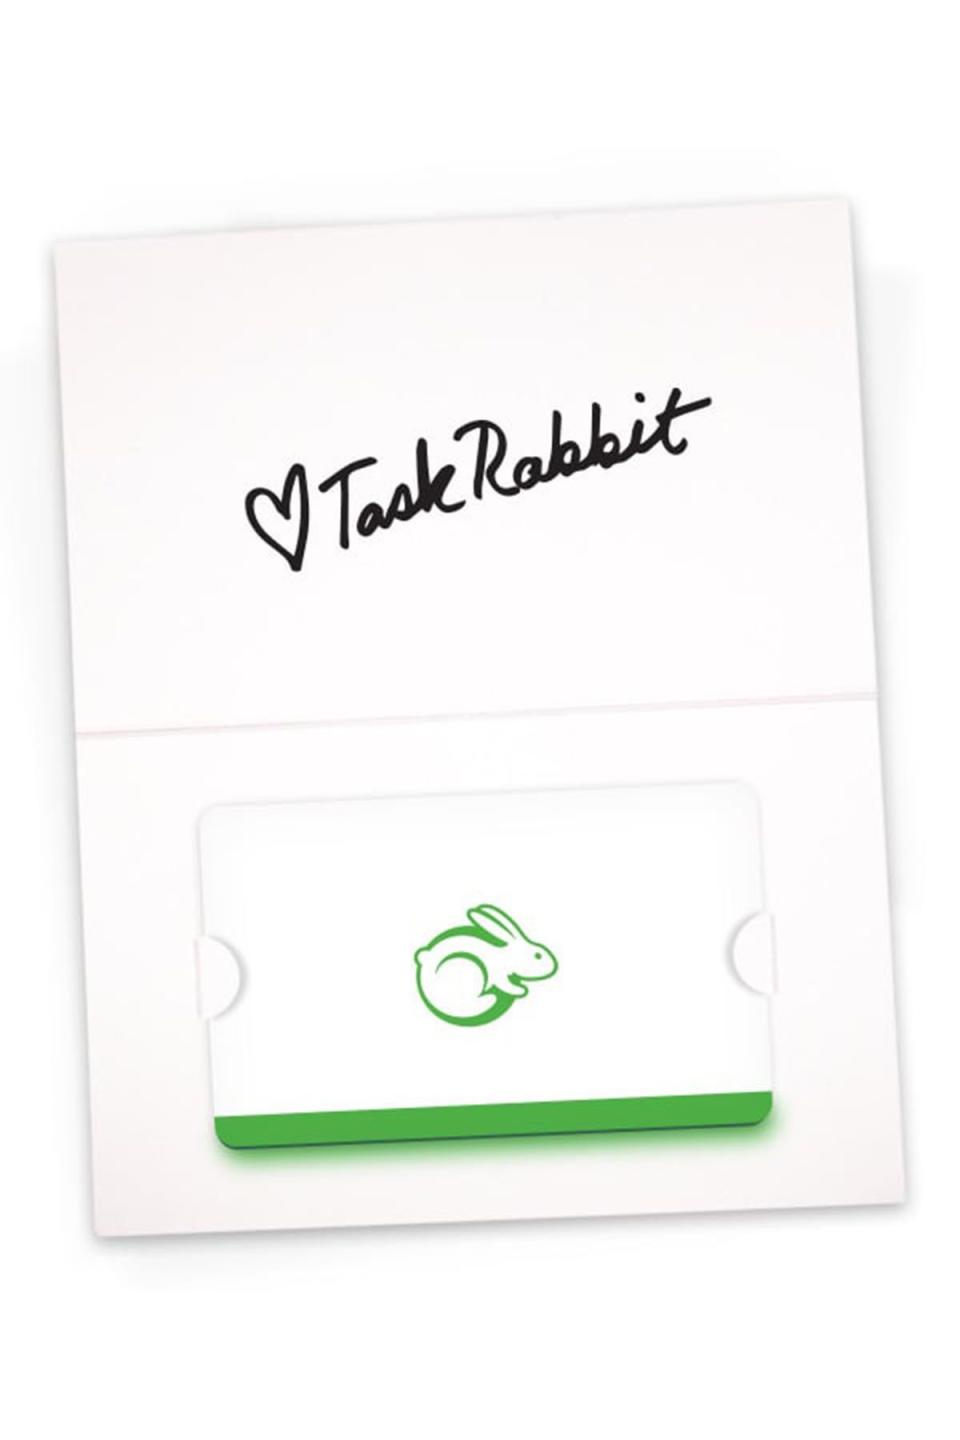 4) TaskRabbit Gift Card